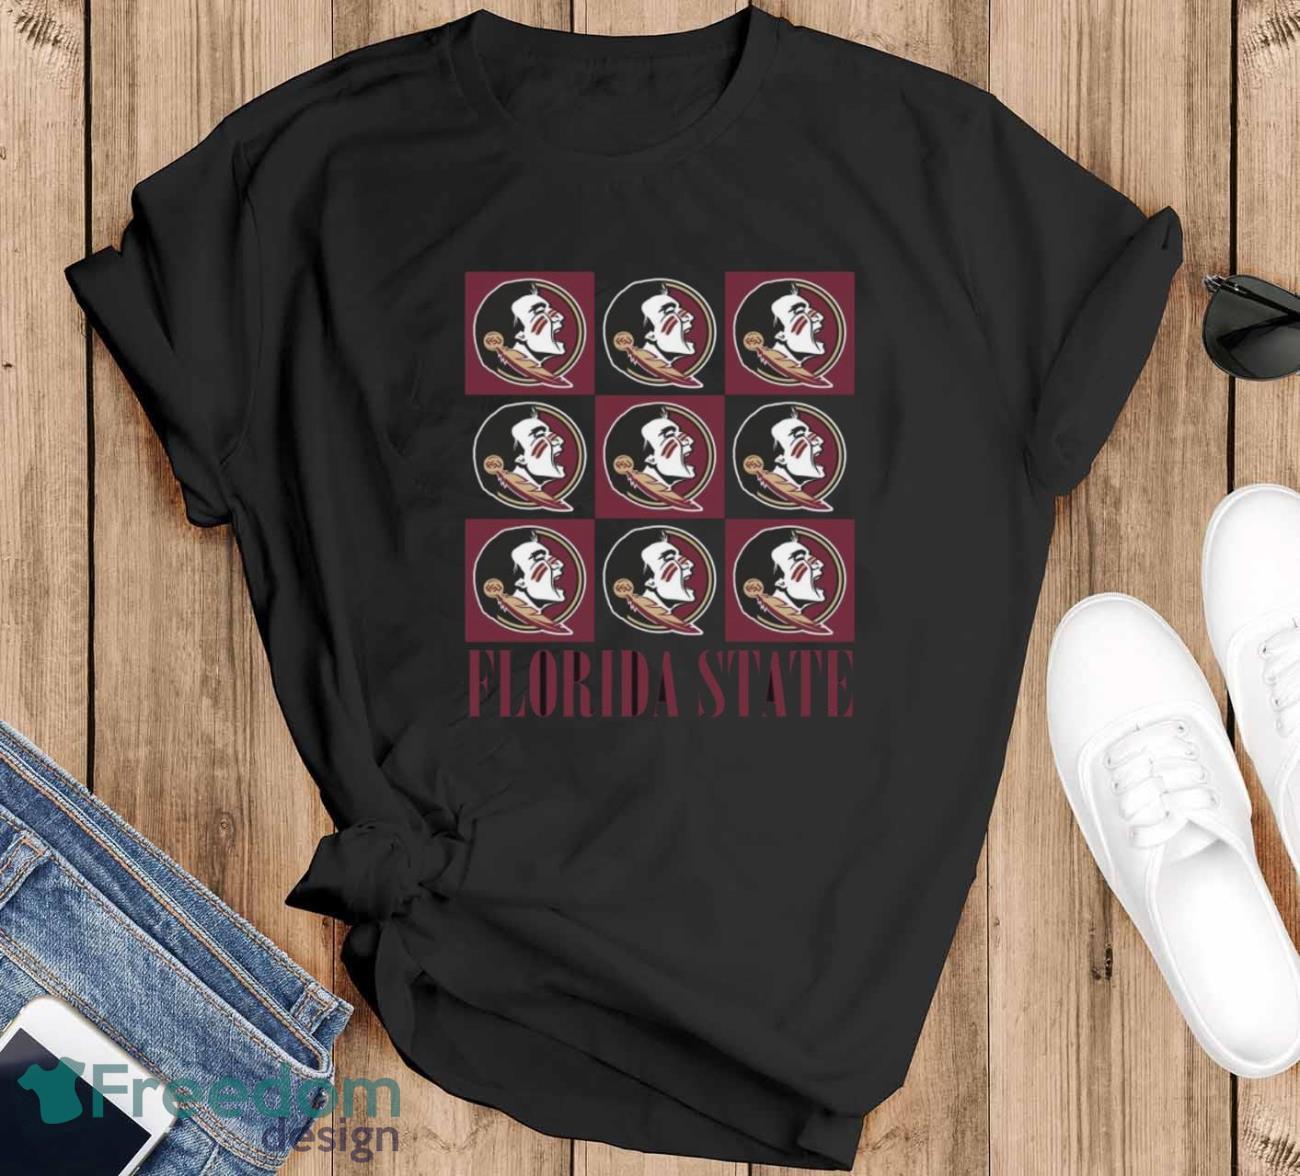 Florida State Seminoles Dog Jersey - Medium